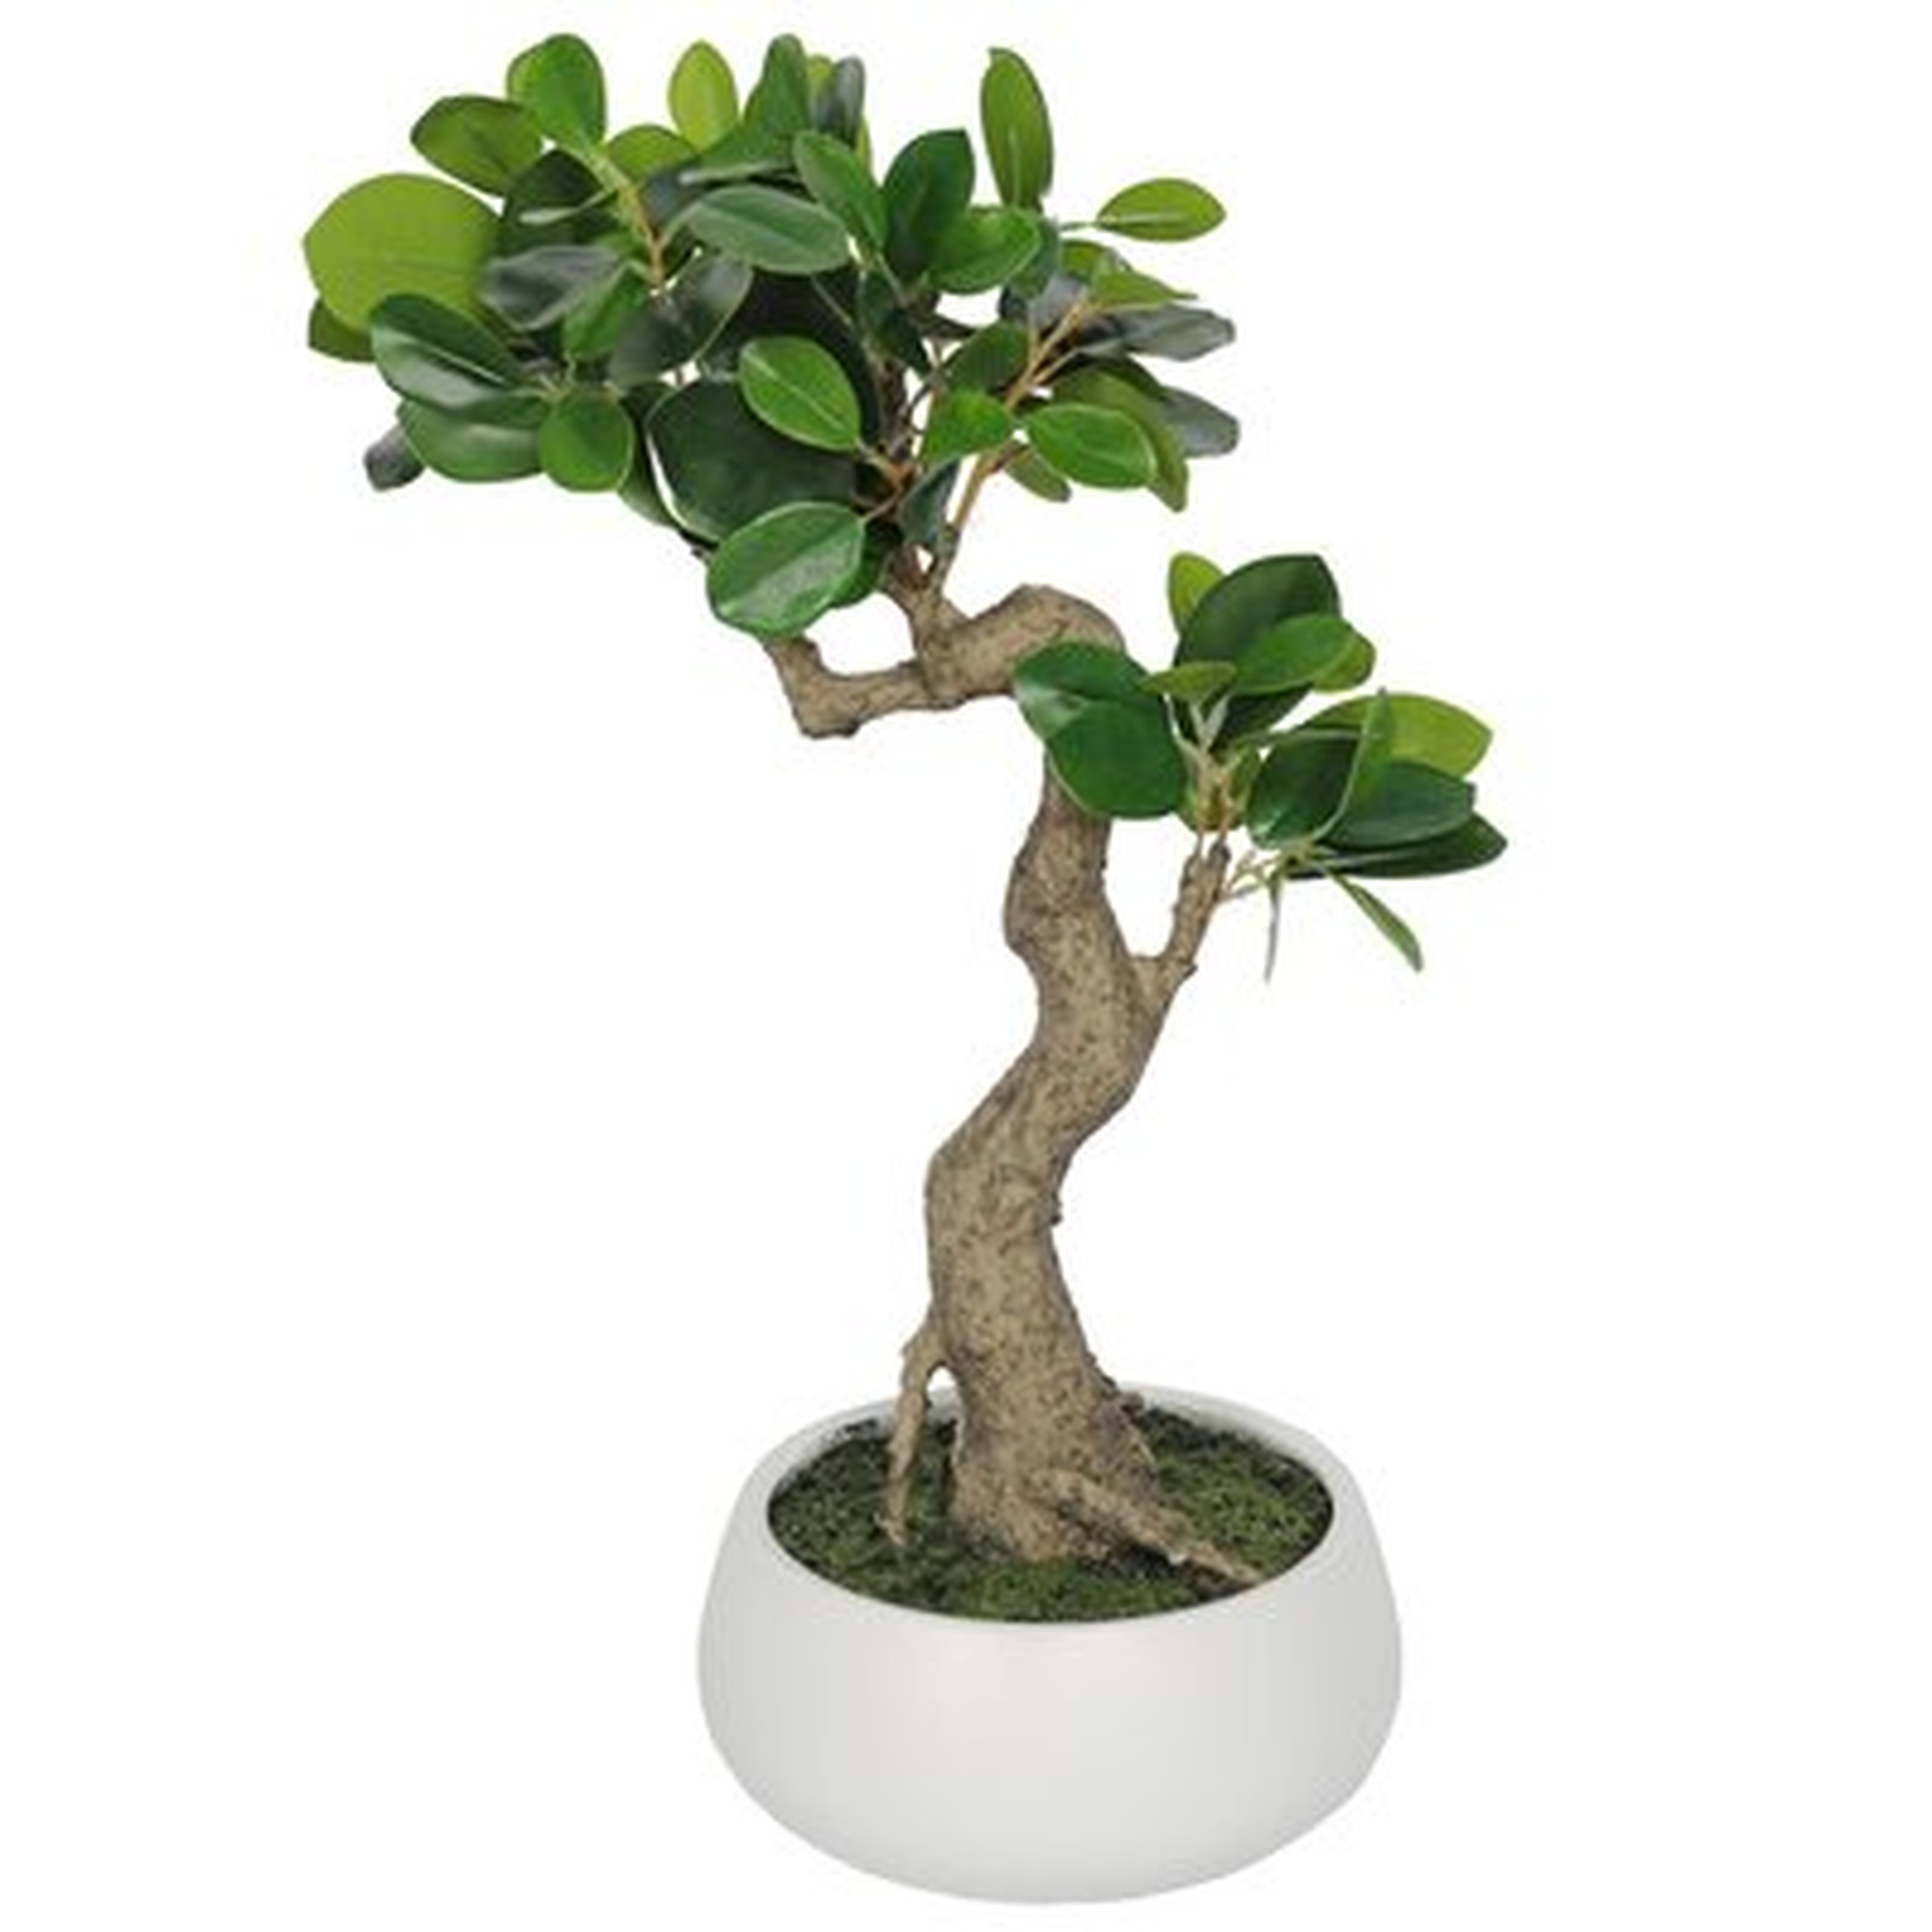 15.5" Artificial Bonsai Tree in Planter - Wayfair